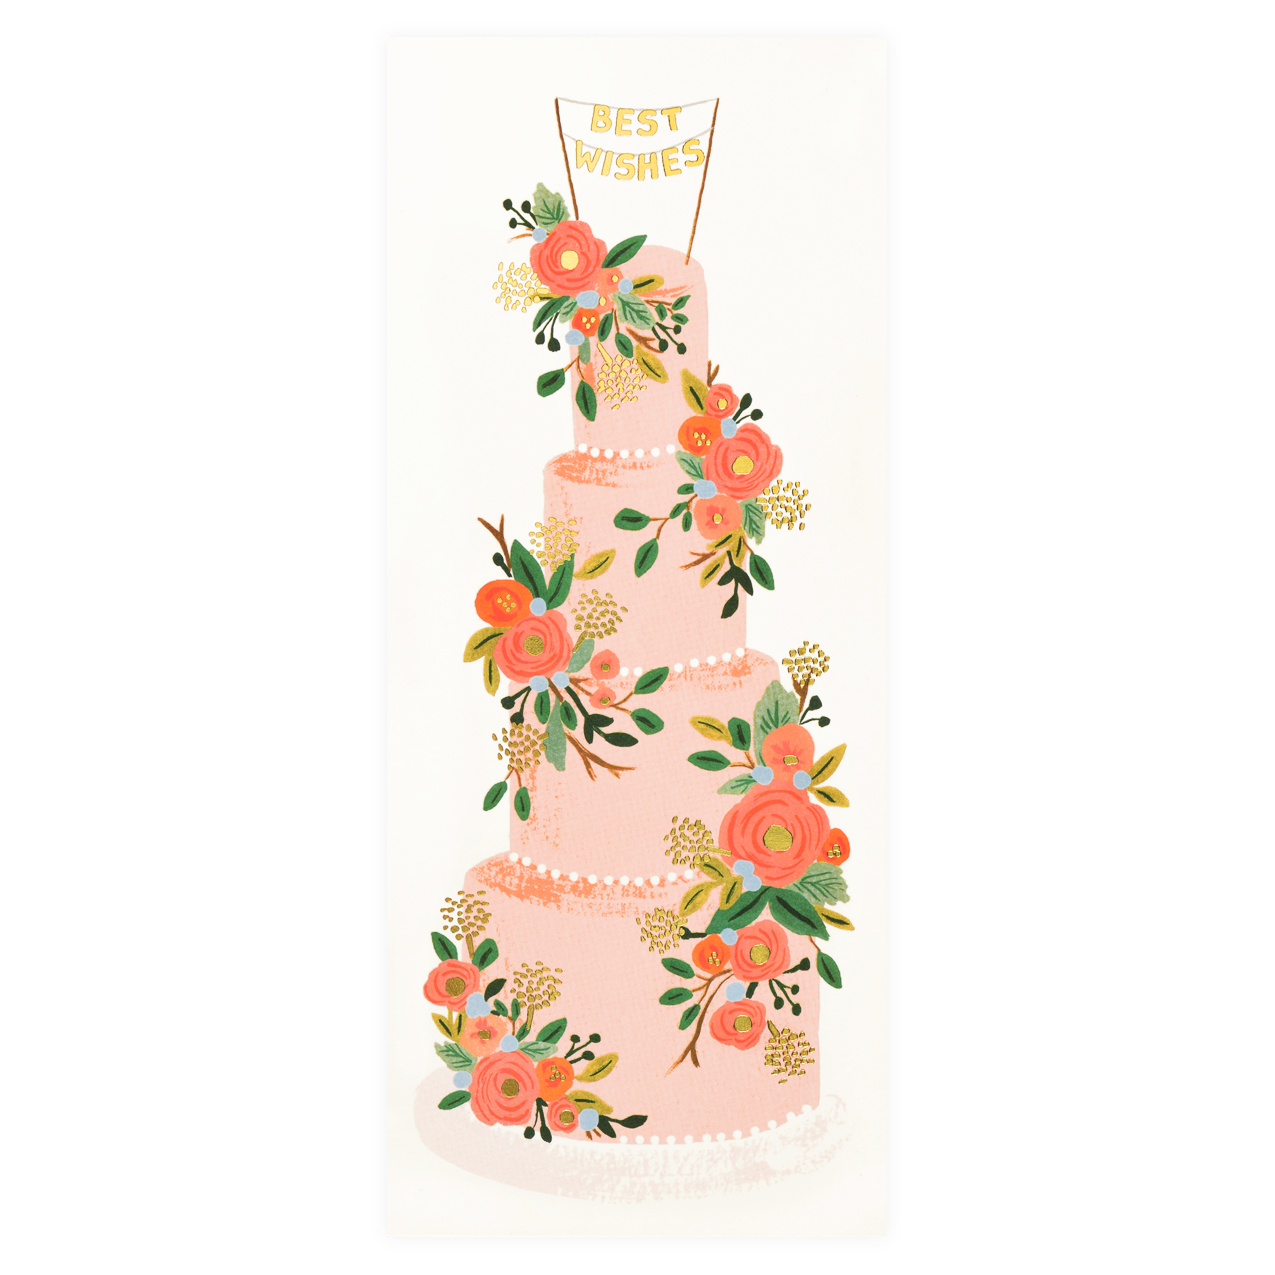 Tall Wedding Cake Greeting Card